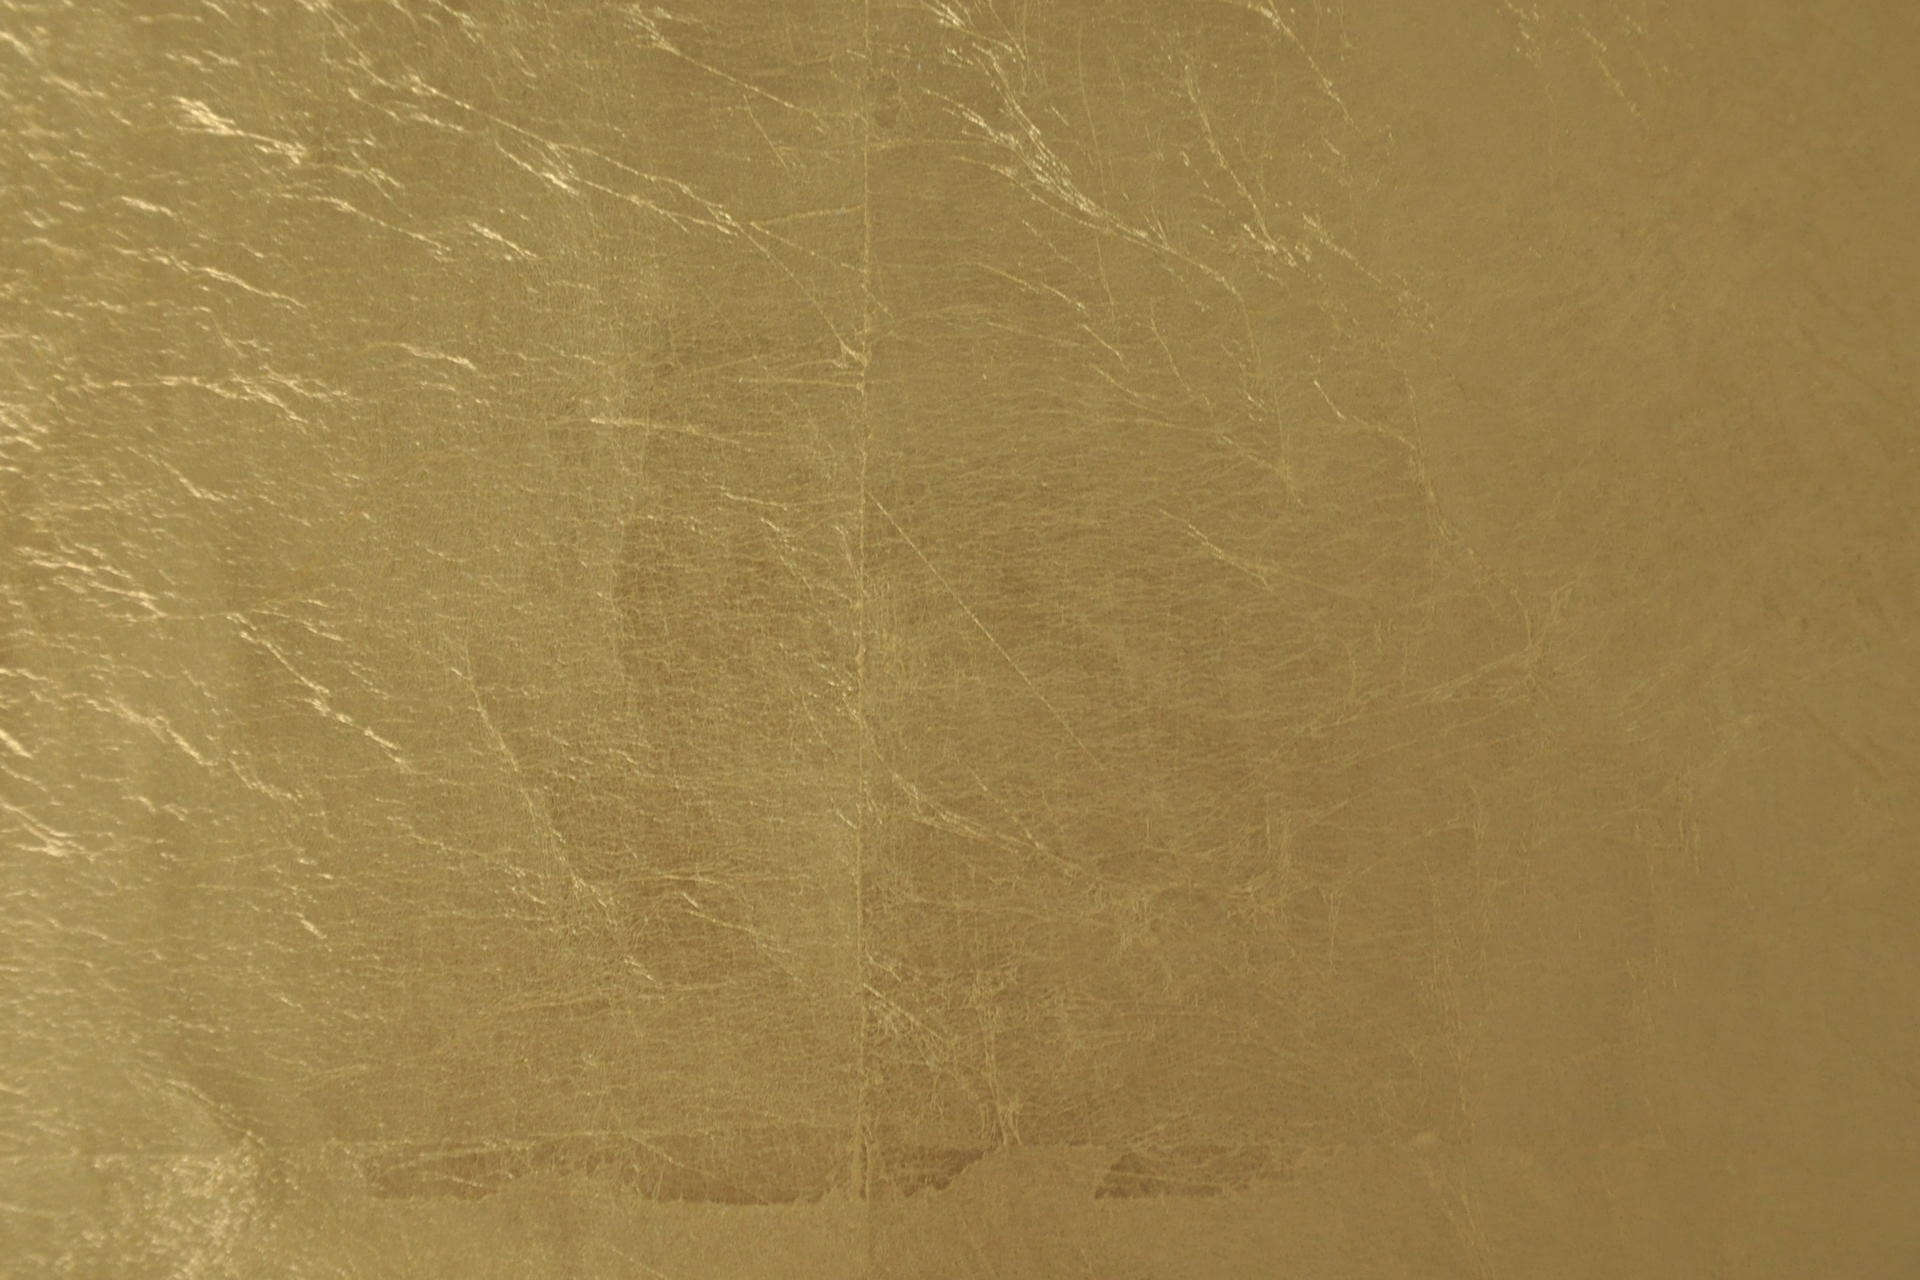 silver foil wallpaper,brown,beige,tile,flooring,wood